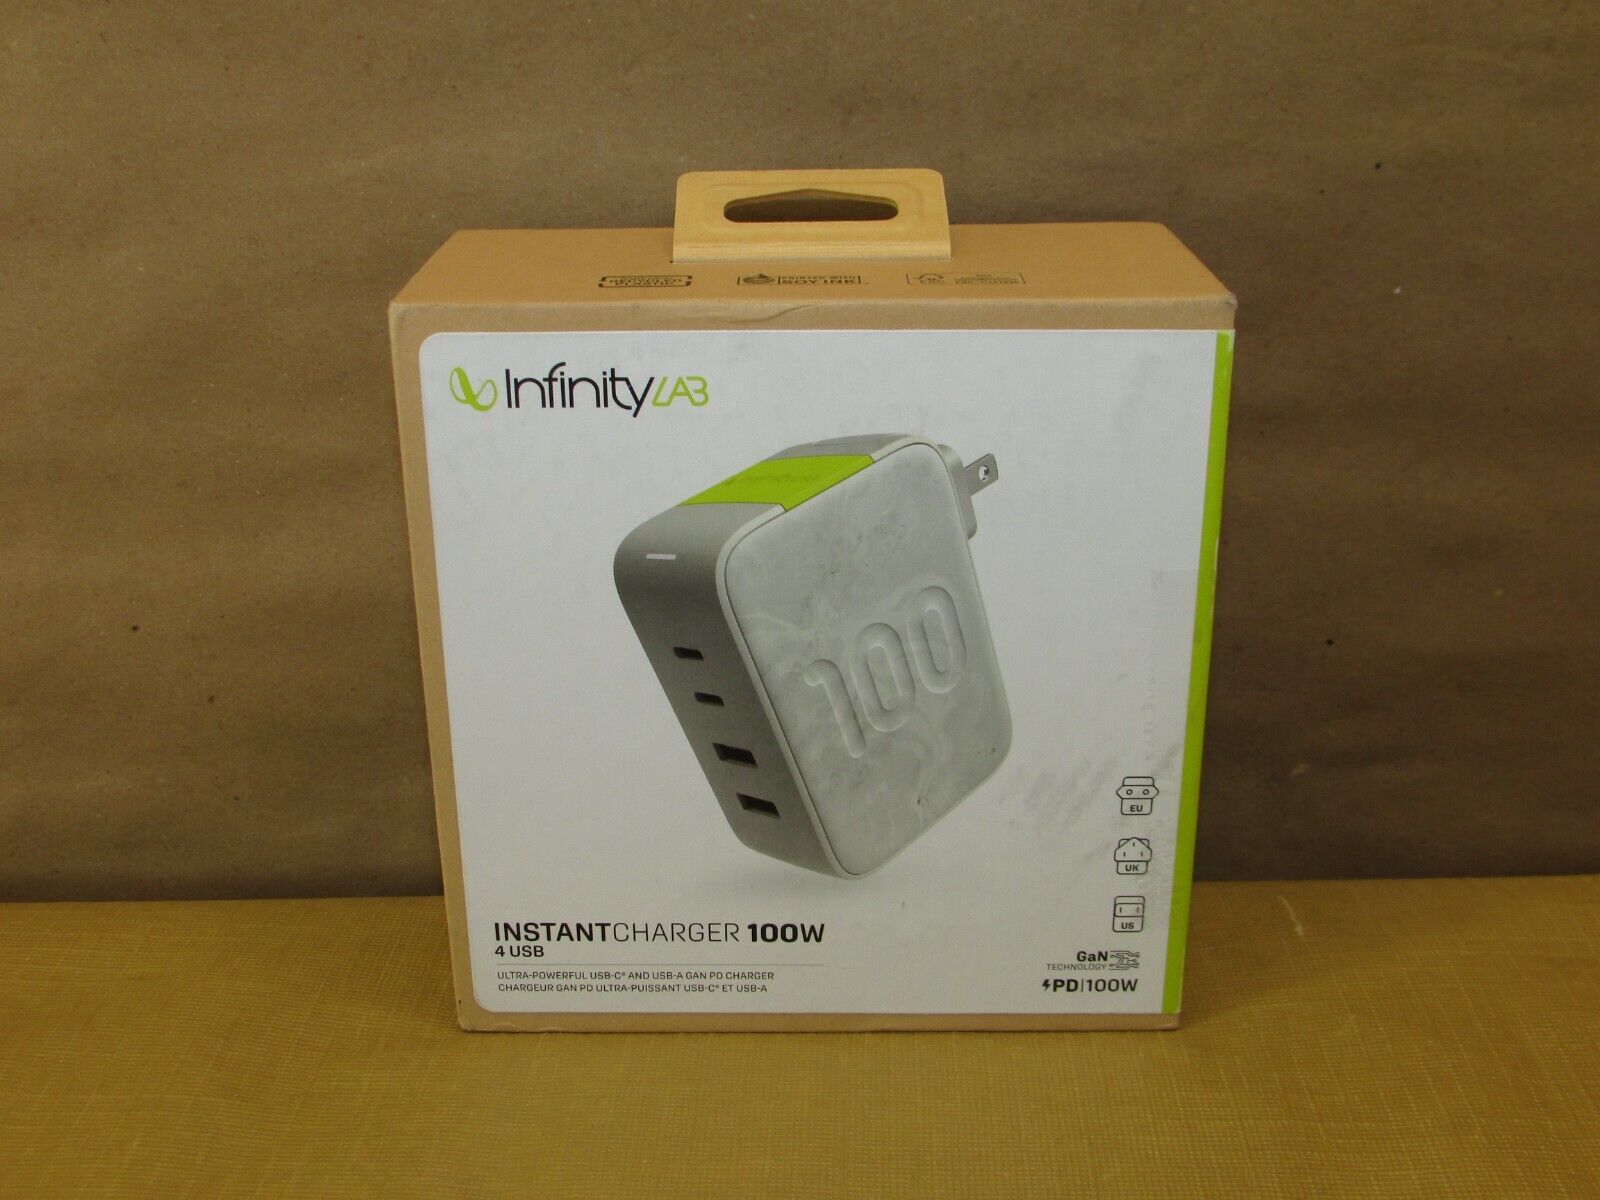 InfinityLab InstantCharger 100W 4 USB Ultra-Powerful USB-C and USB-A